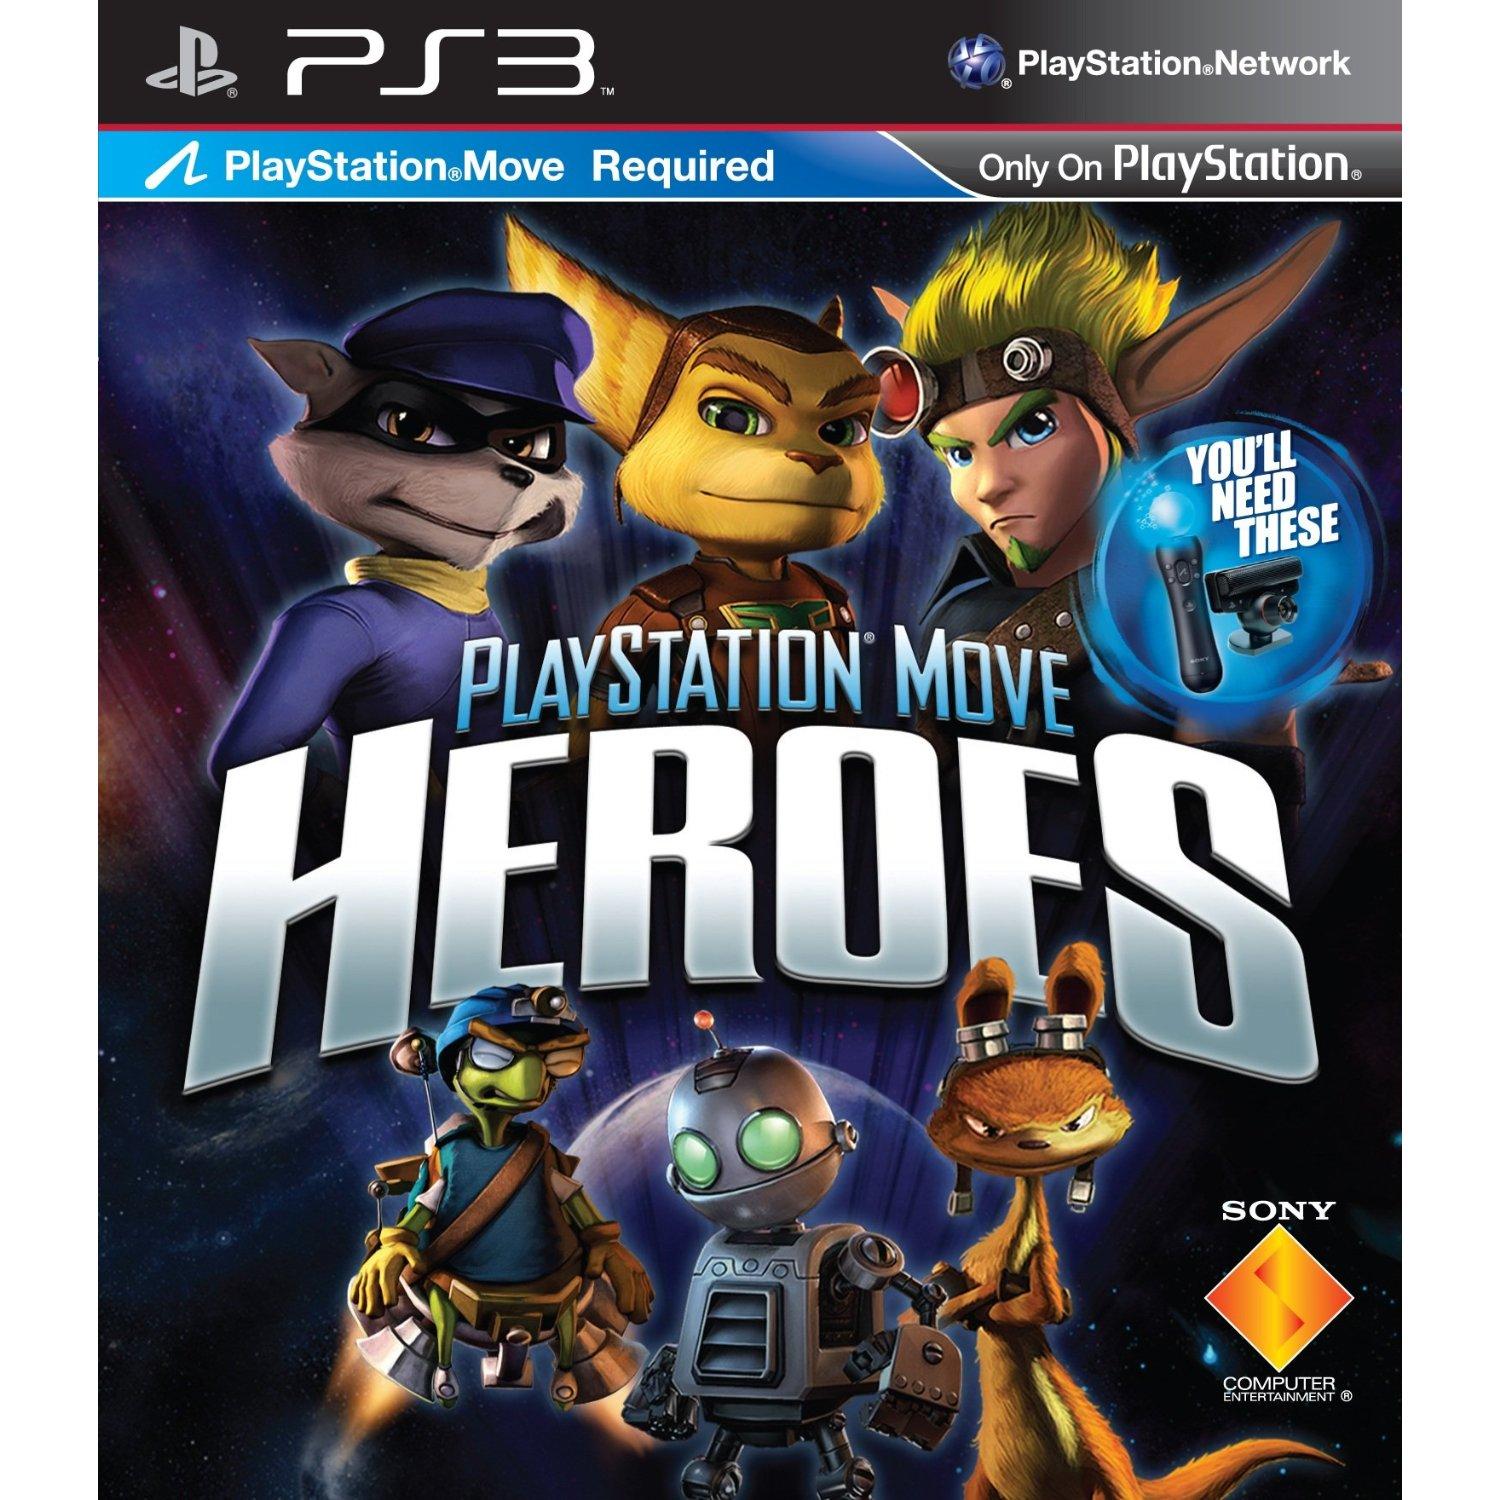 [C.P] Playstation Move Heroes disponible sur PS3